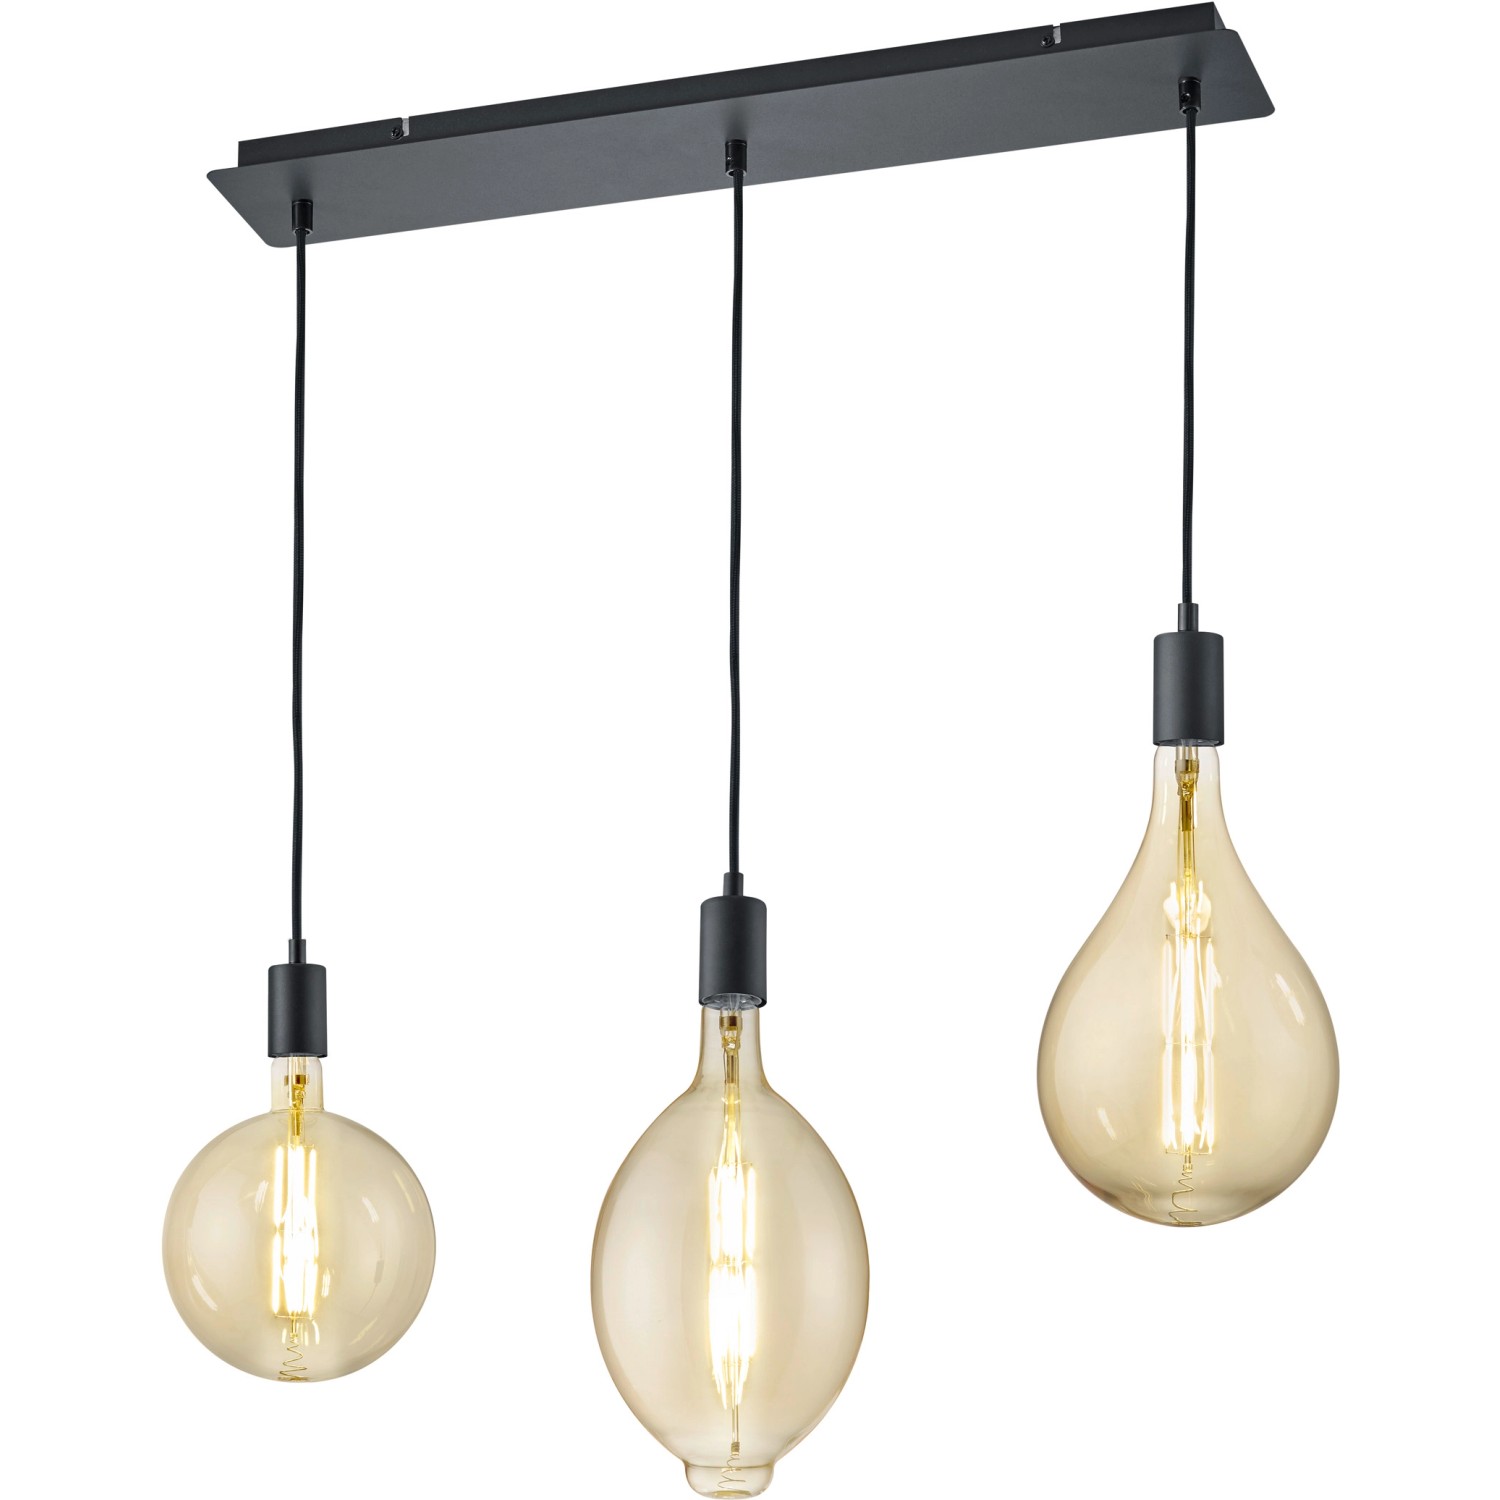 Trio LED-Deckenlampe Ginster Schwarz matt 3-flammig dimmbar kaufen bei OBI